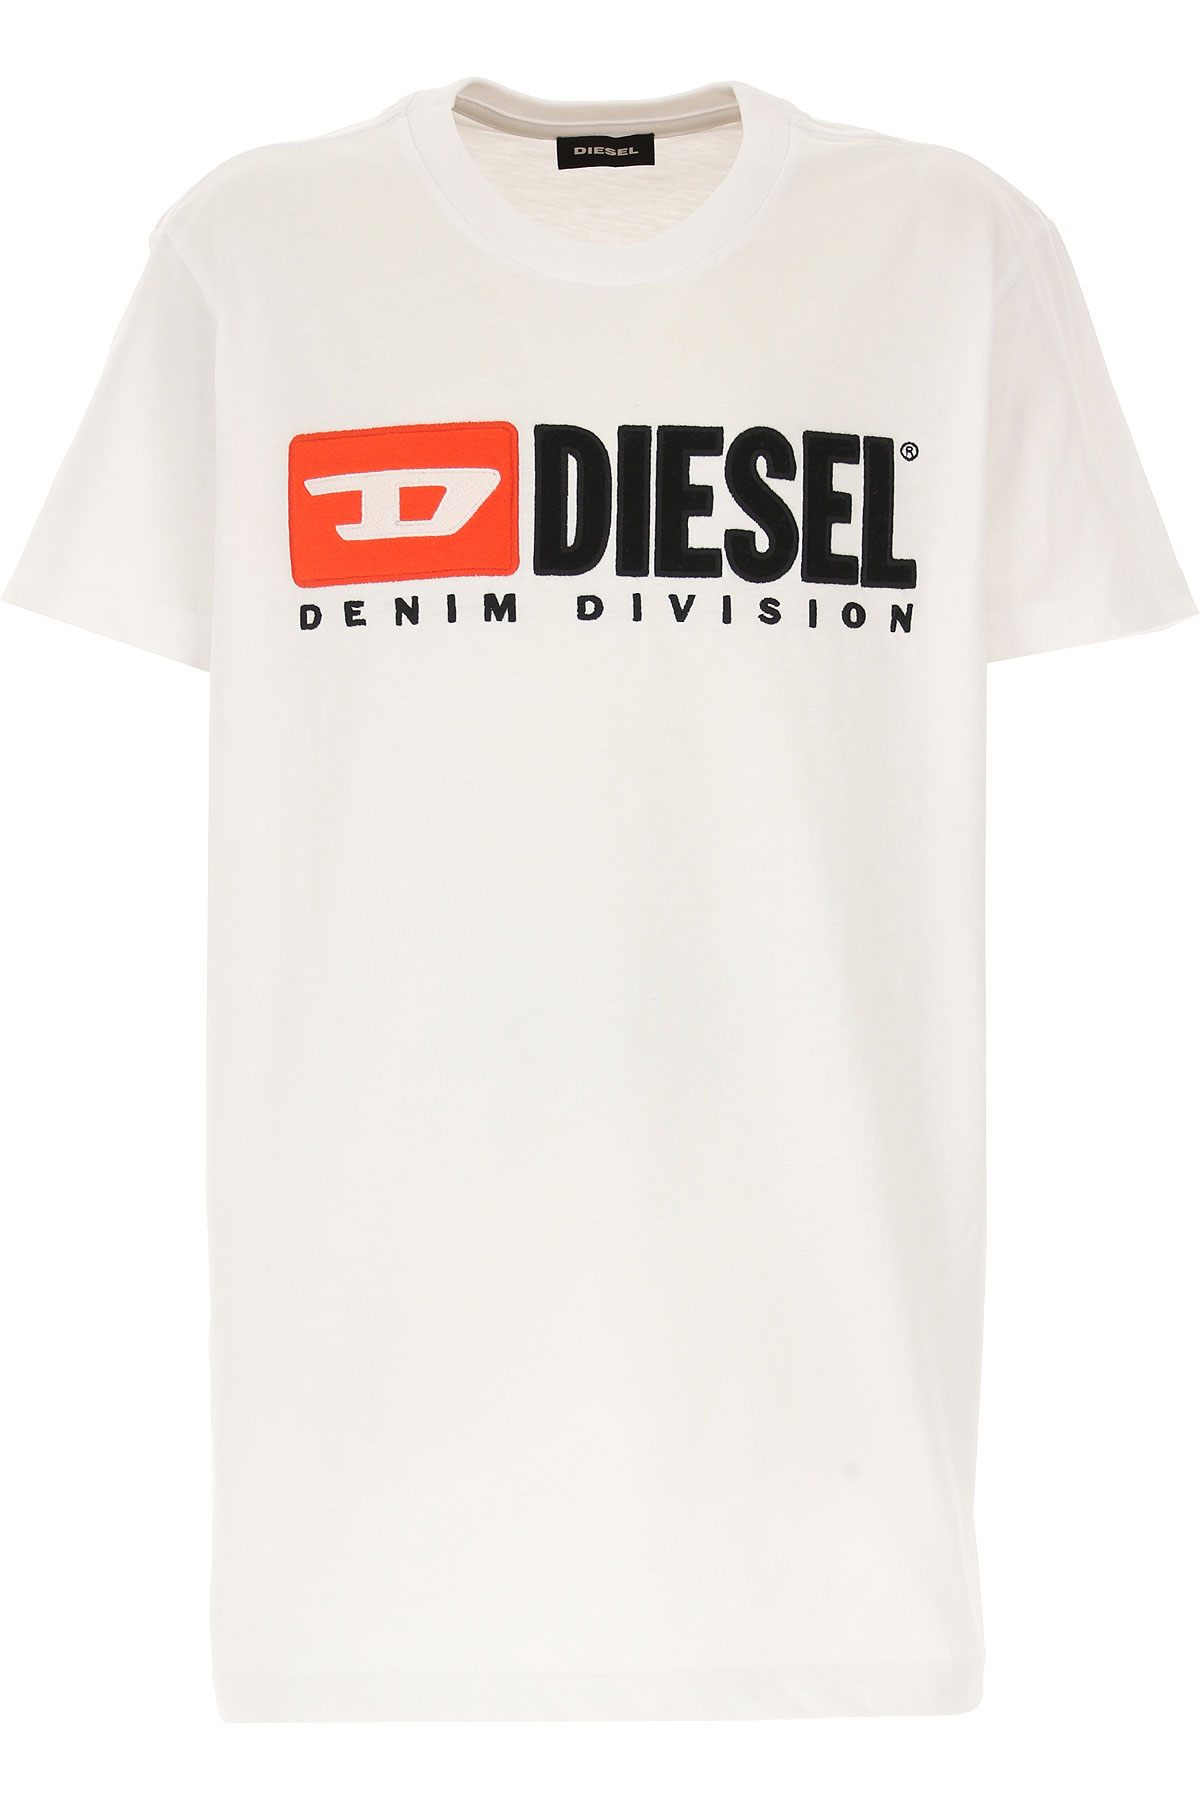 Diesel Kinder T-Shirt für Jungen, Weiss, Baumwolle, 2017, 10Y 12Y 14Y 16Y 4Y 6Y 8Y